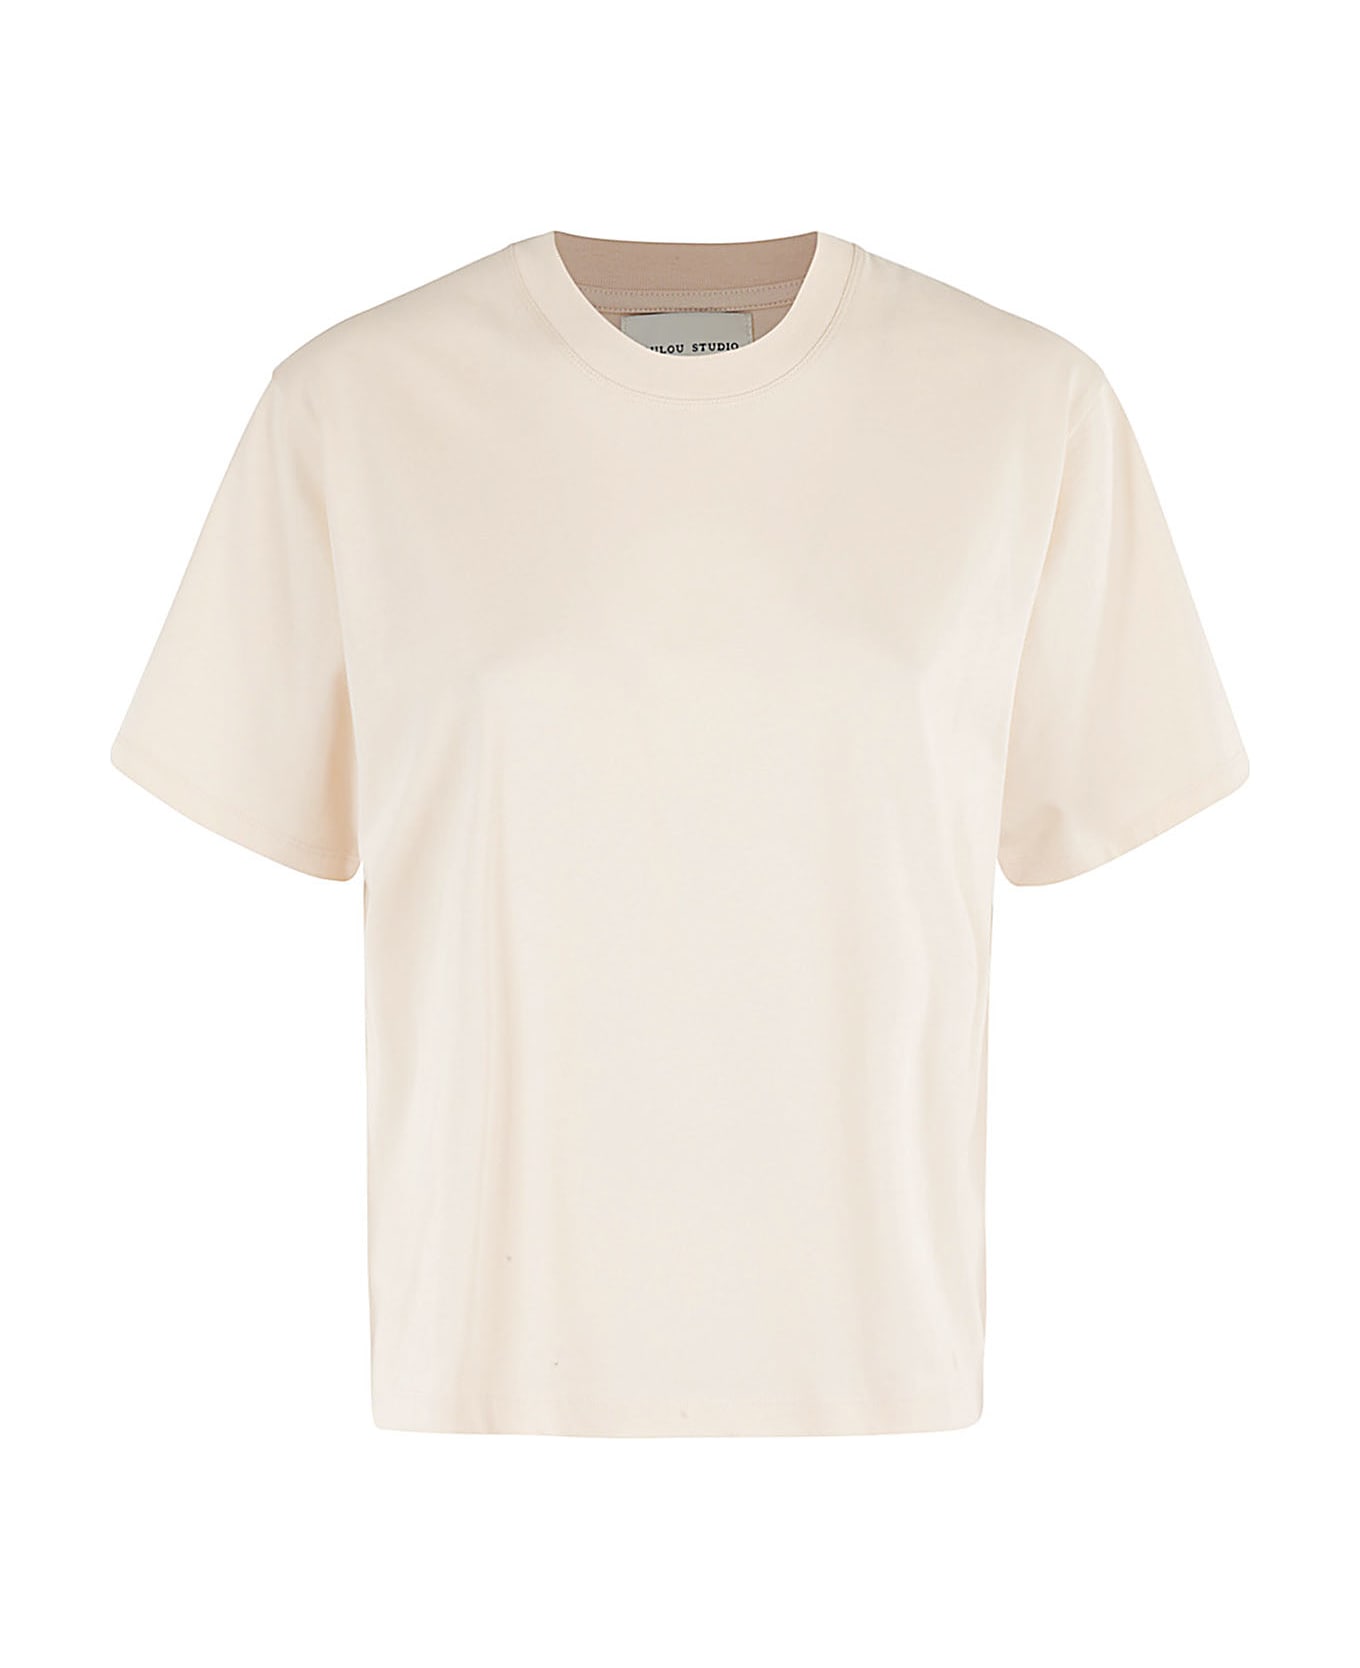 Loulou Studio Cotton Tshirt - Cream Rose Tシャツ